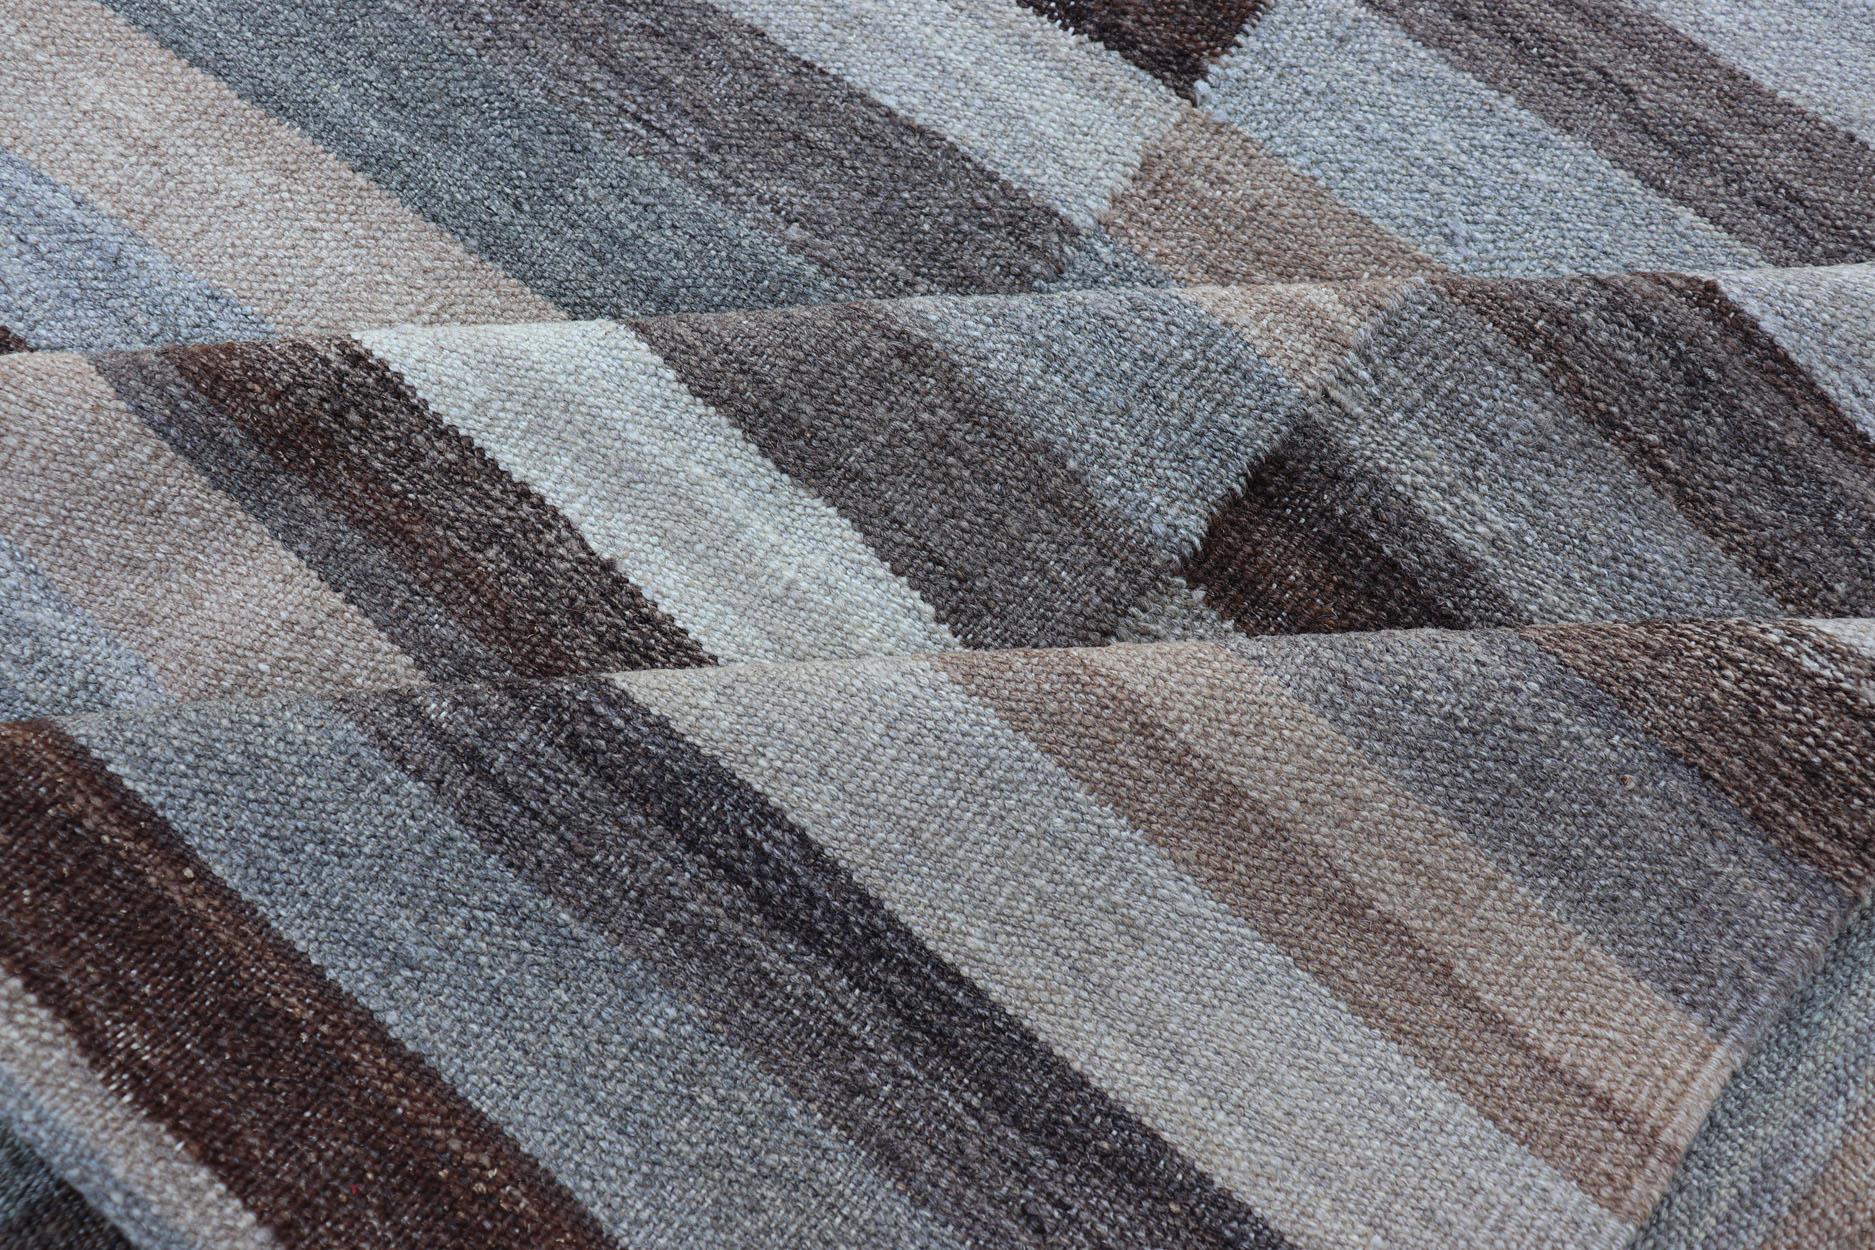 Modern Flat-Weave Kilim Rug in Multi-Panel Striped Design in Earthy Tones For Sale 2